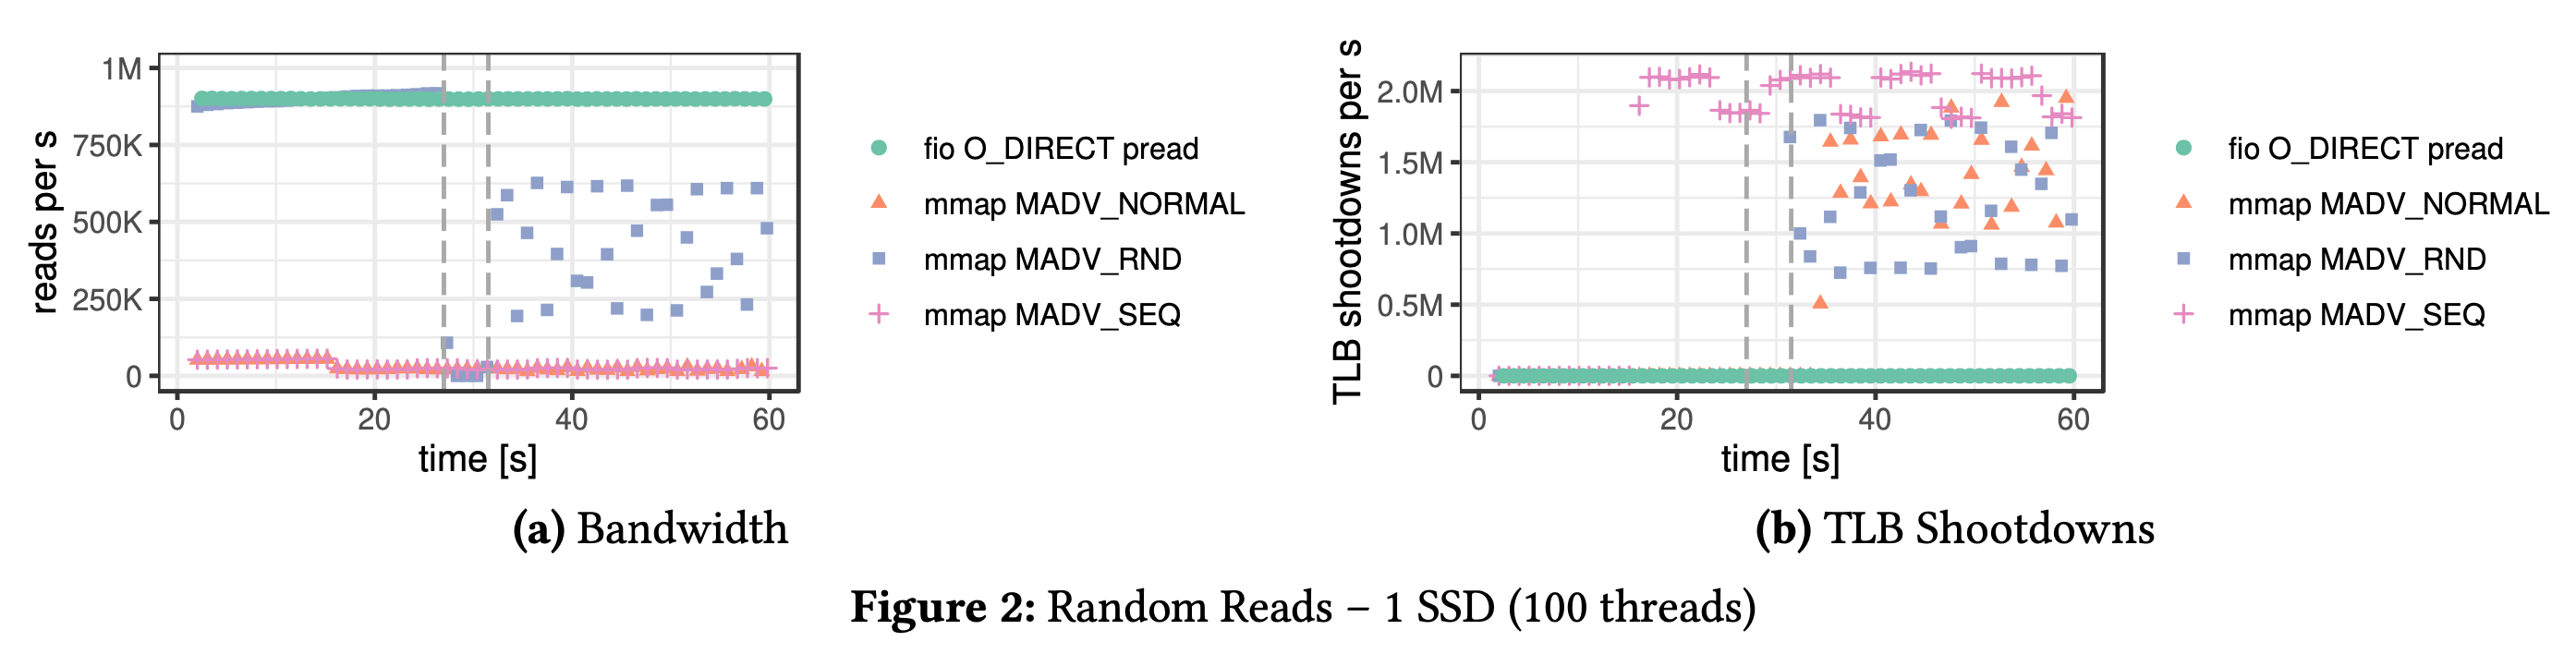 Figure 2: Random Reads - 1 SSD (100 threads)